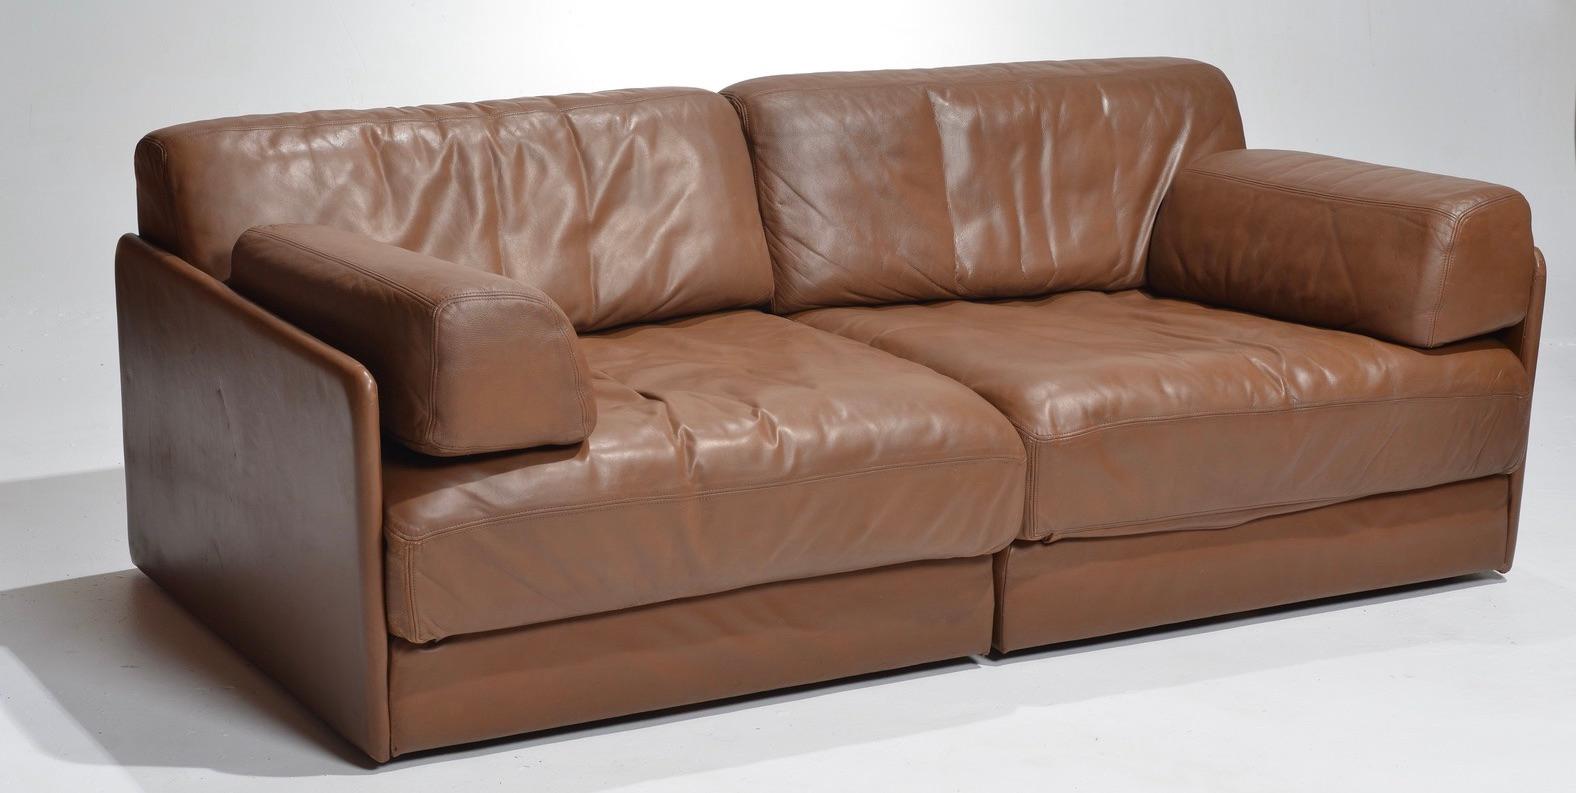 Swiss De Sede Leather Convertible Sofa Bed